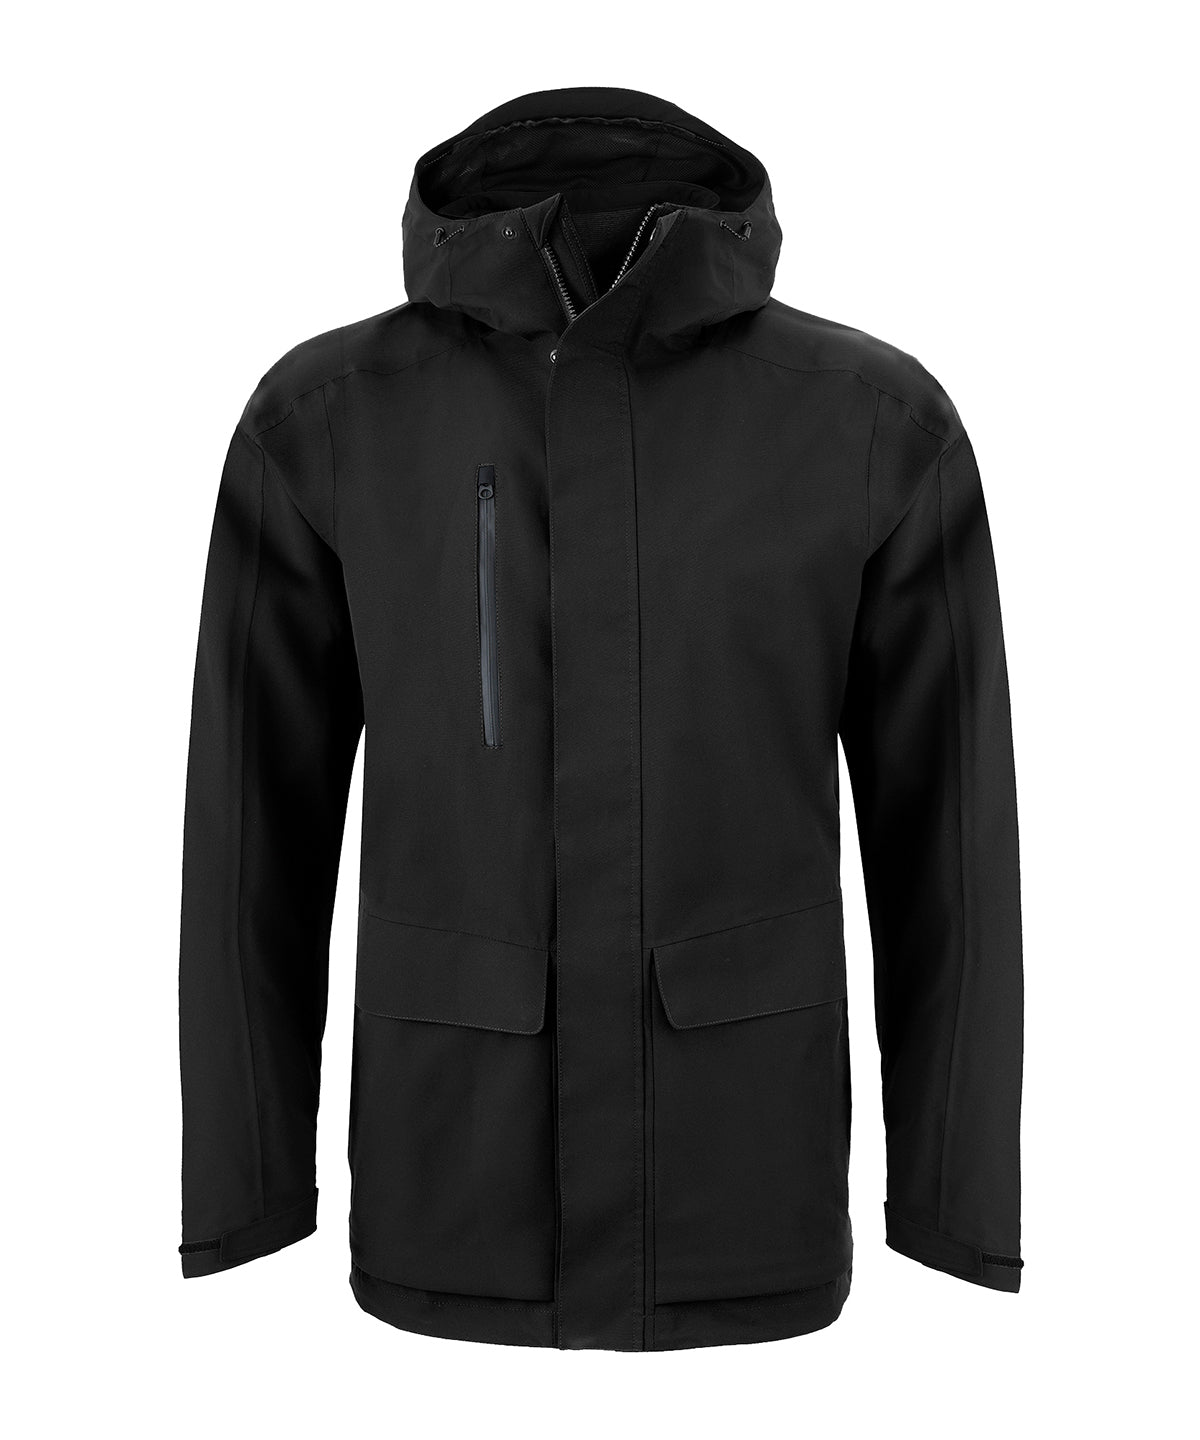 Expert Kiwi pro stretch long jacket | Black